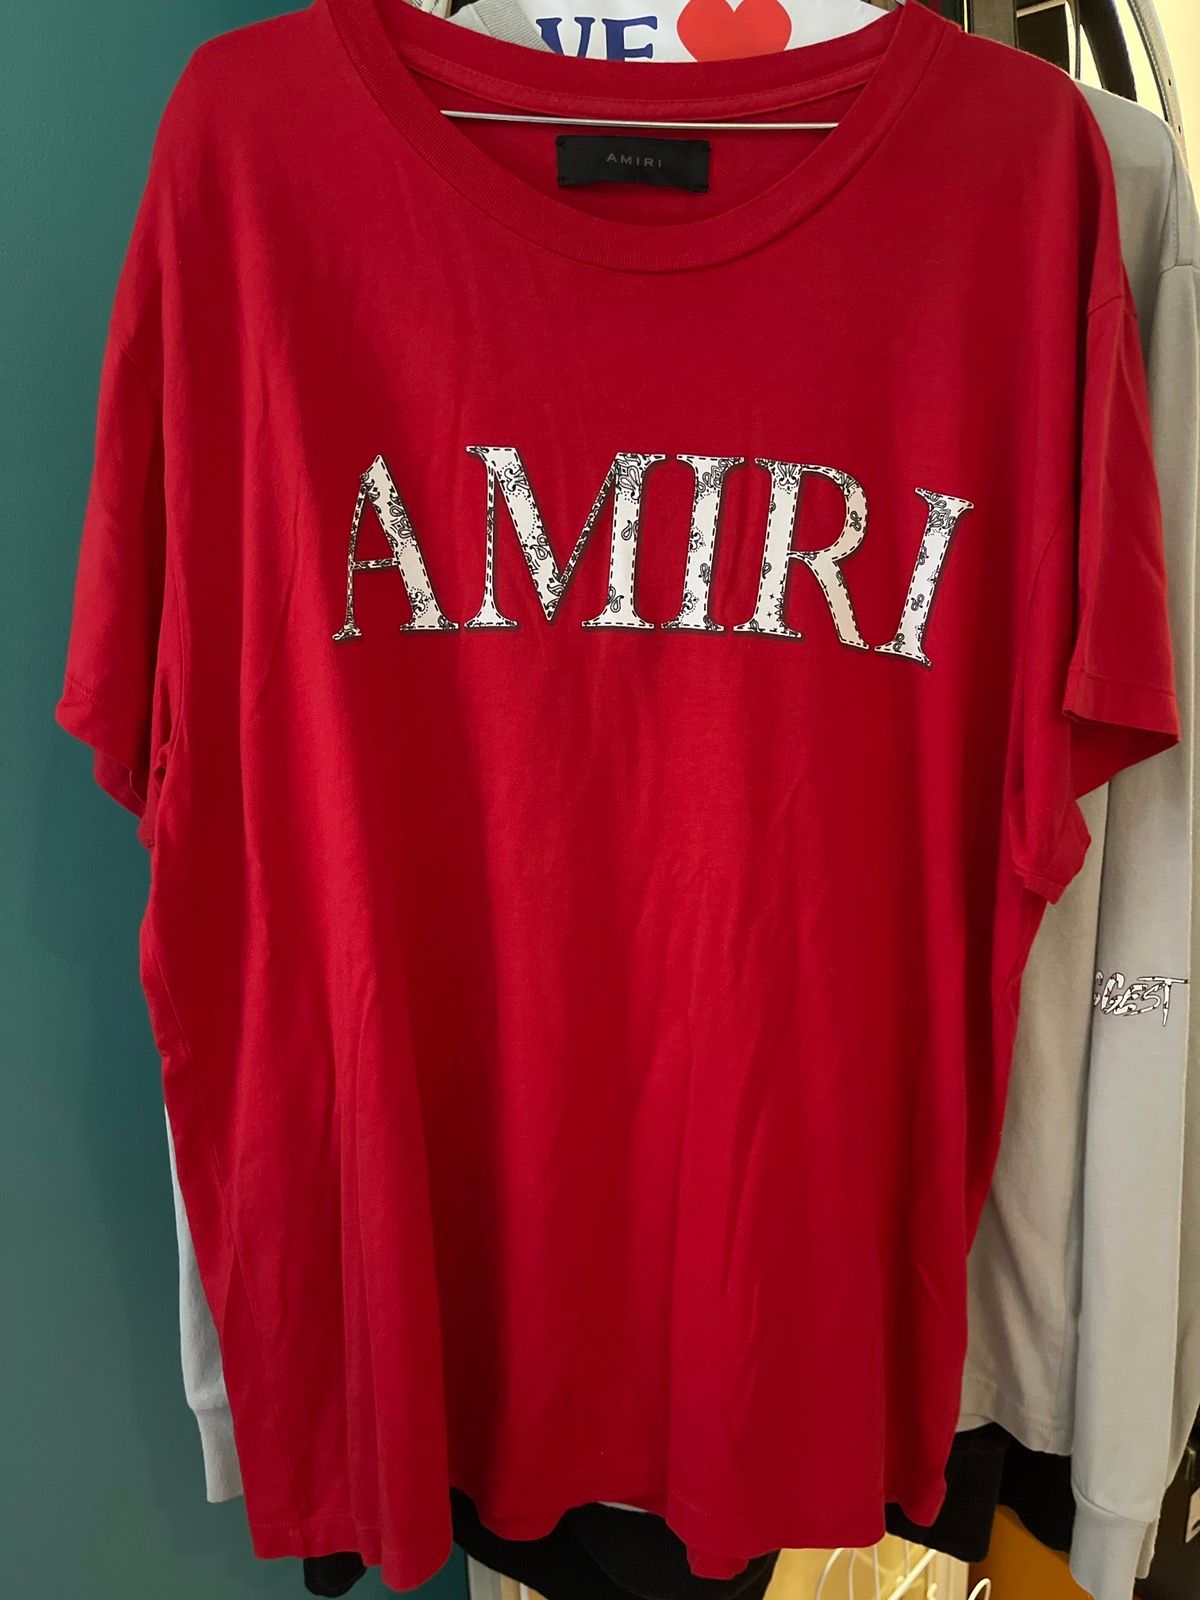 Amiri Amiri tee t shirt red